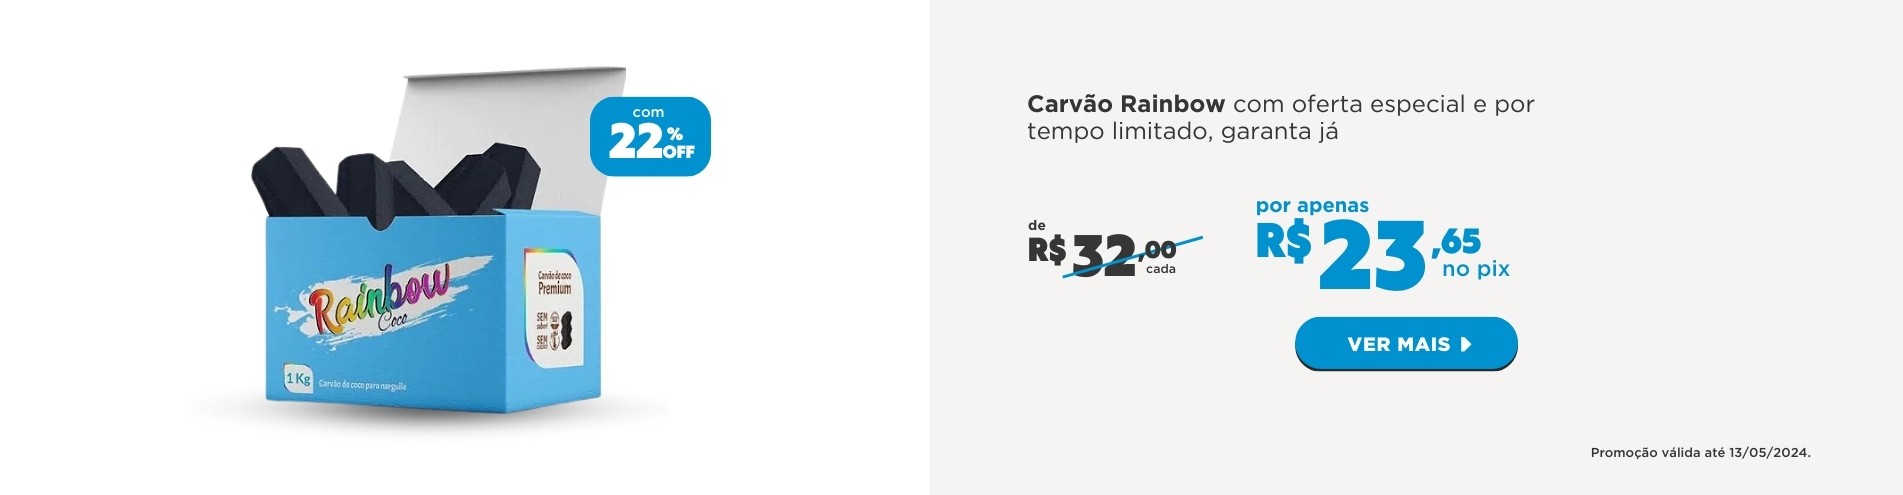 240426_CARVAO_RAINBOW